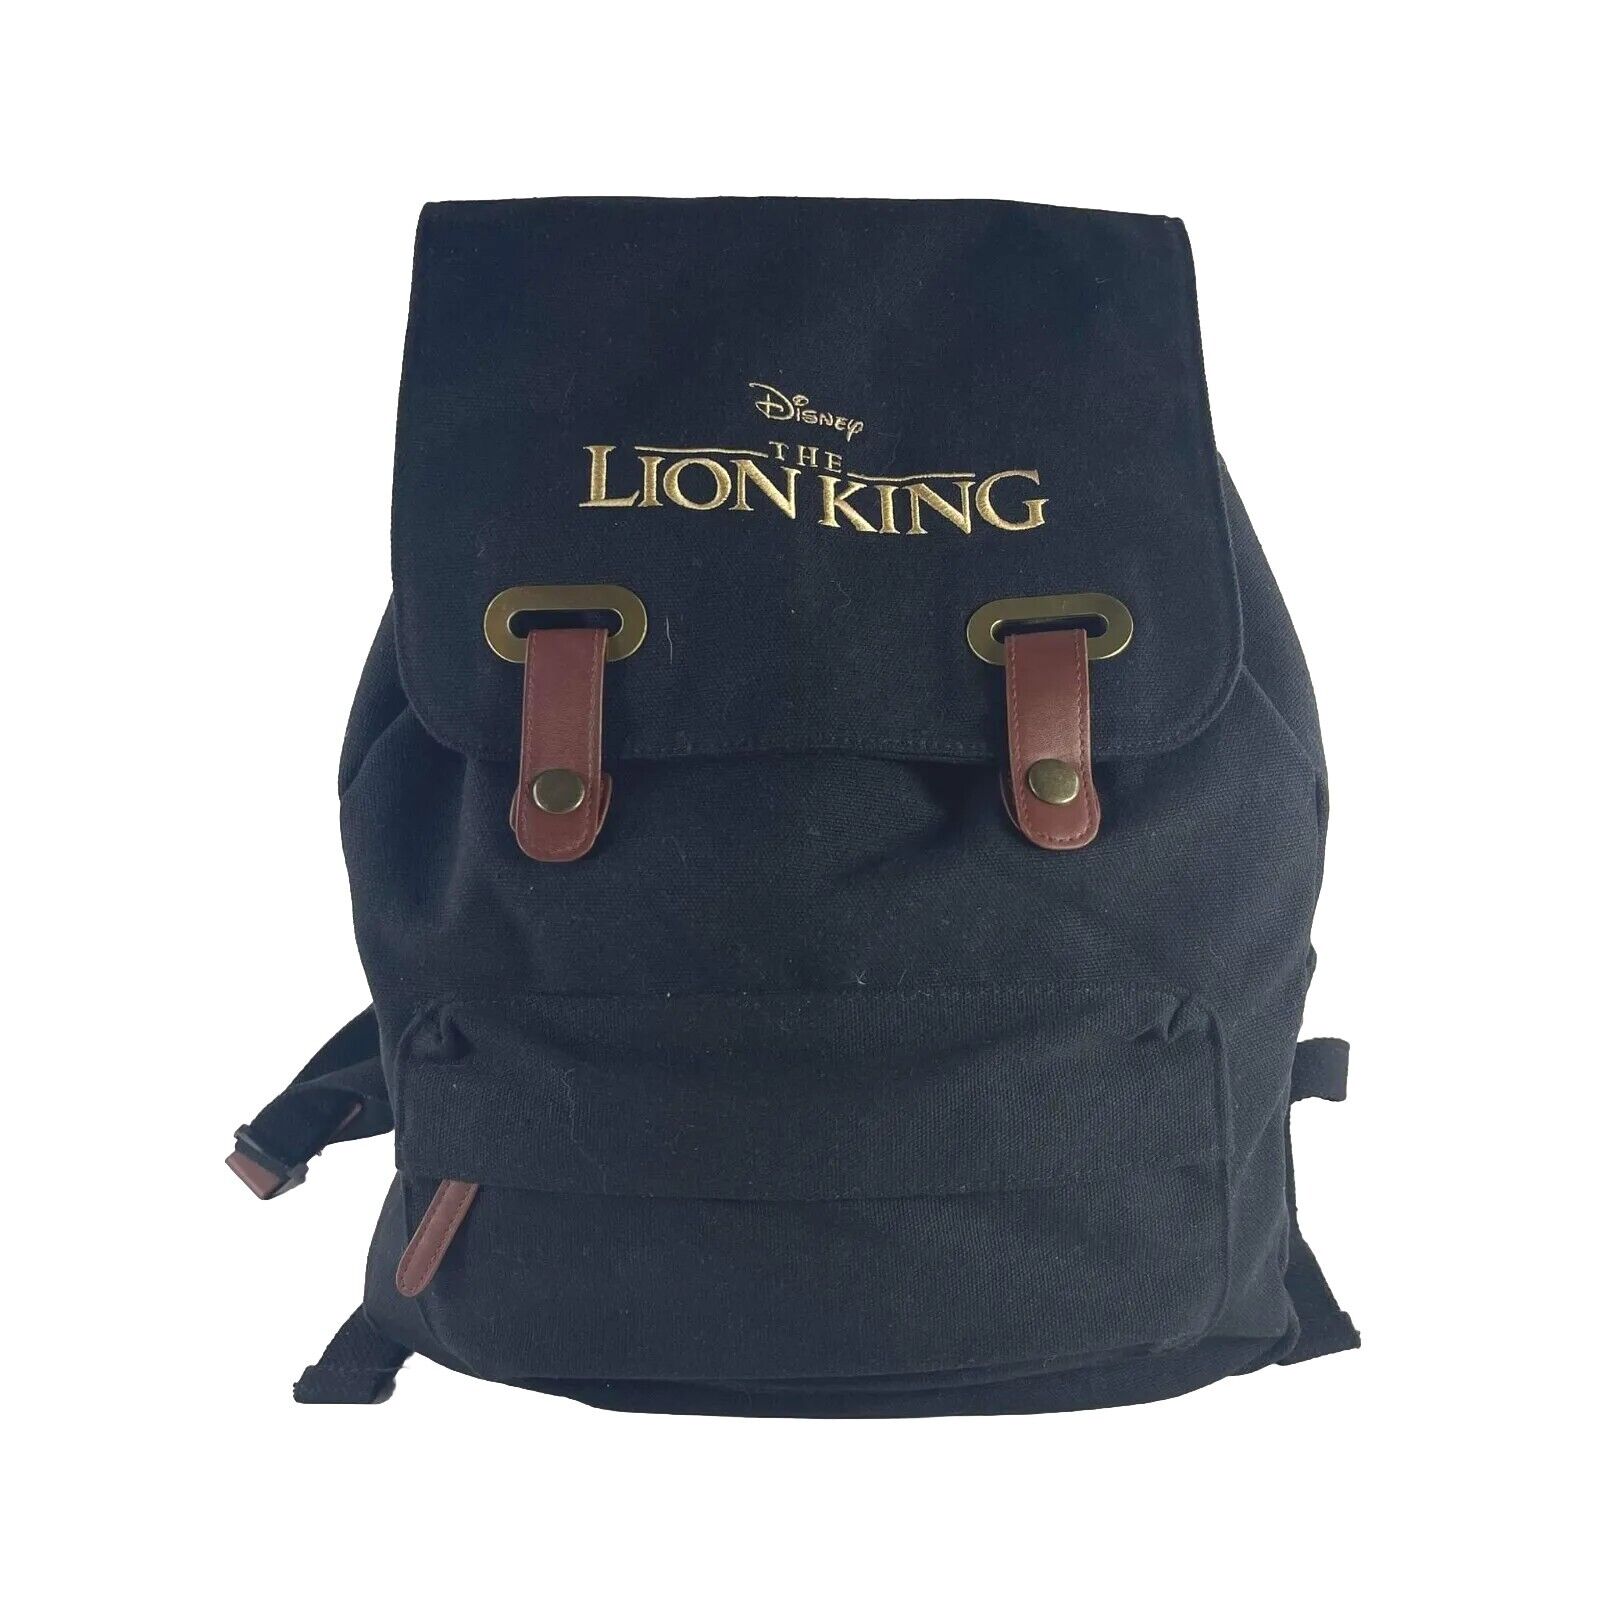 Disney\'s The Lion King Canvas Backpack 2019 RARE Black school bag backpack 